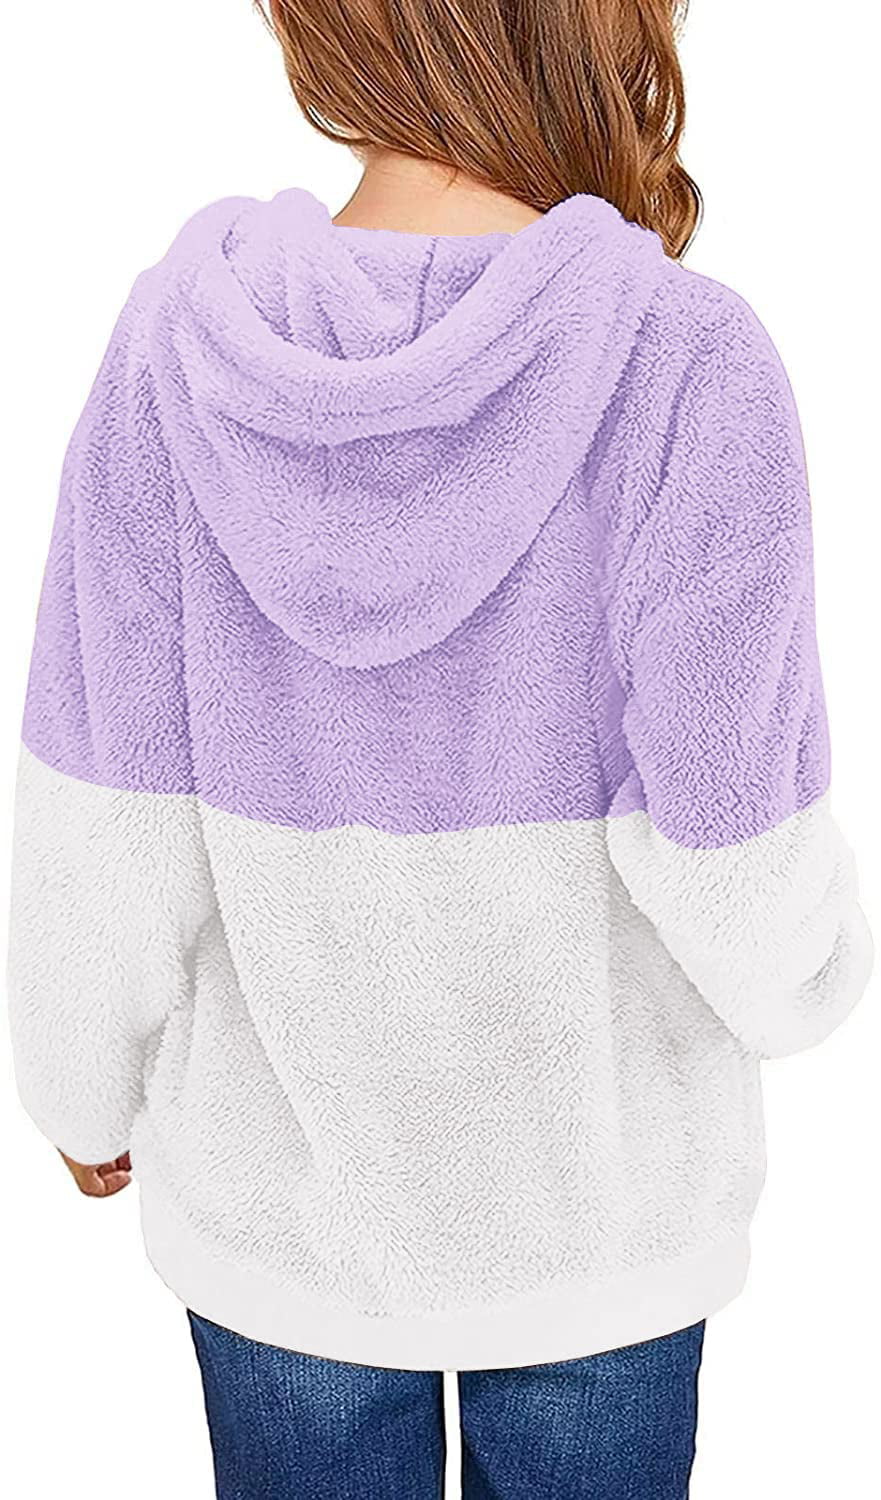 Sherrylily Girls Fuzzy Fleece Pullover Hoodies Sweatshirt Casual